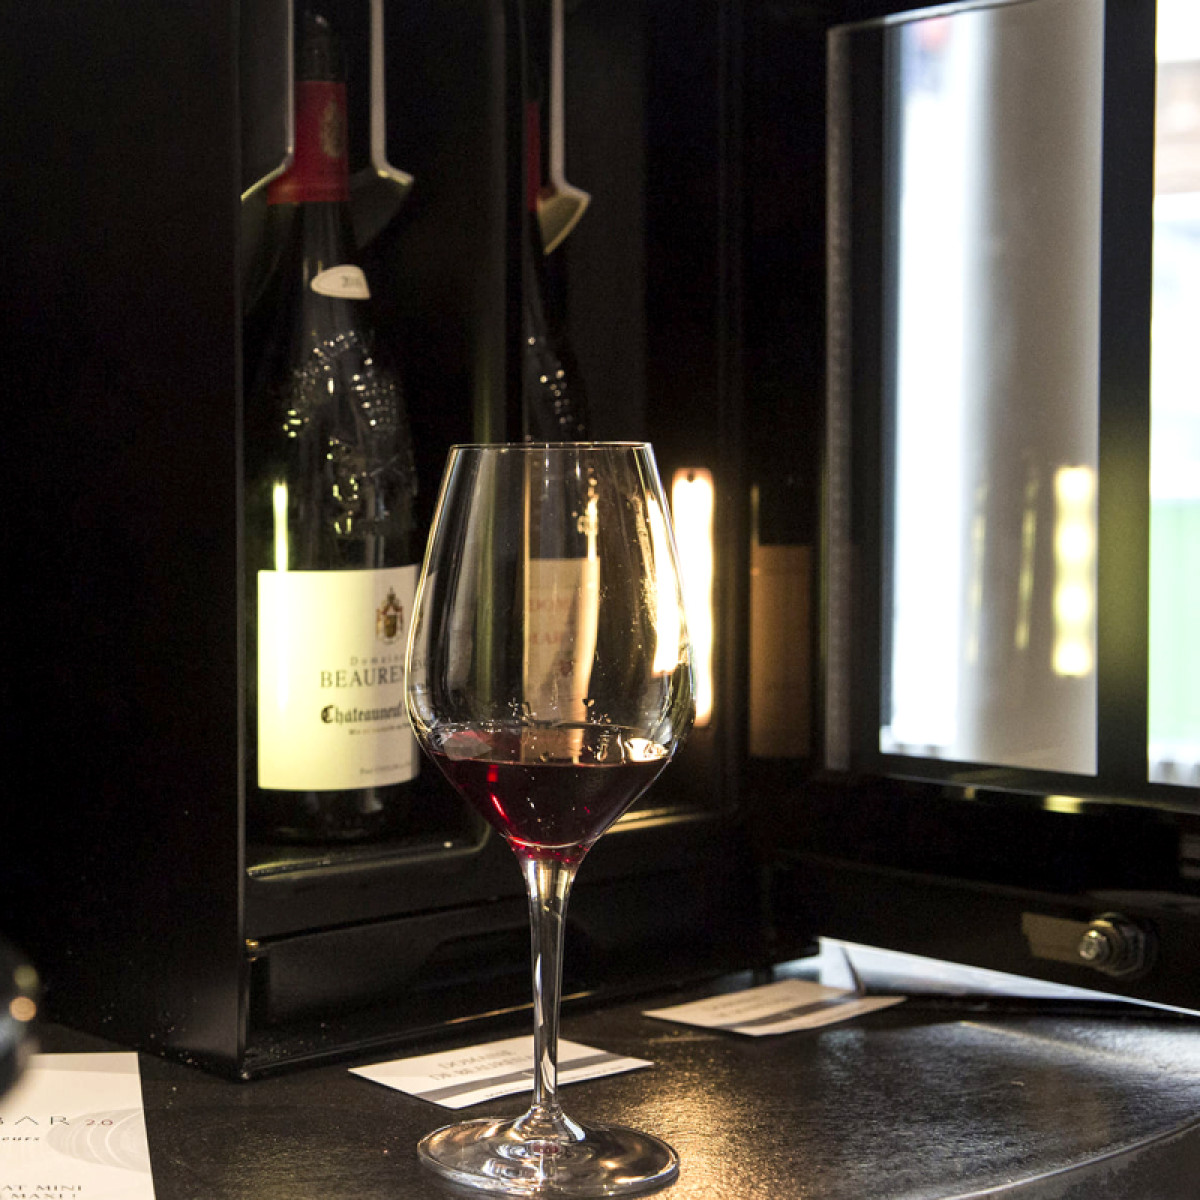 solution-service-vin-au-verre-professionnel-restaurant-bar-a-vin-hotel-brasserie-caviste-eurocave.jpg